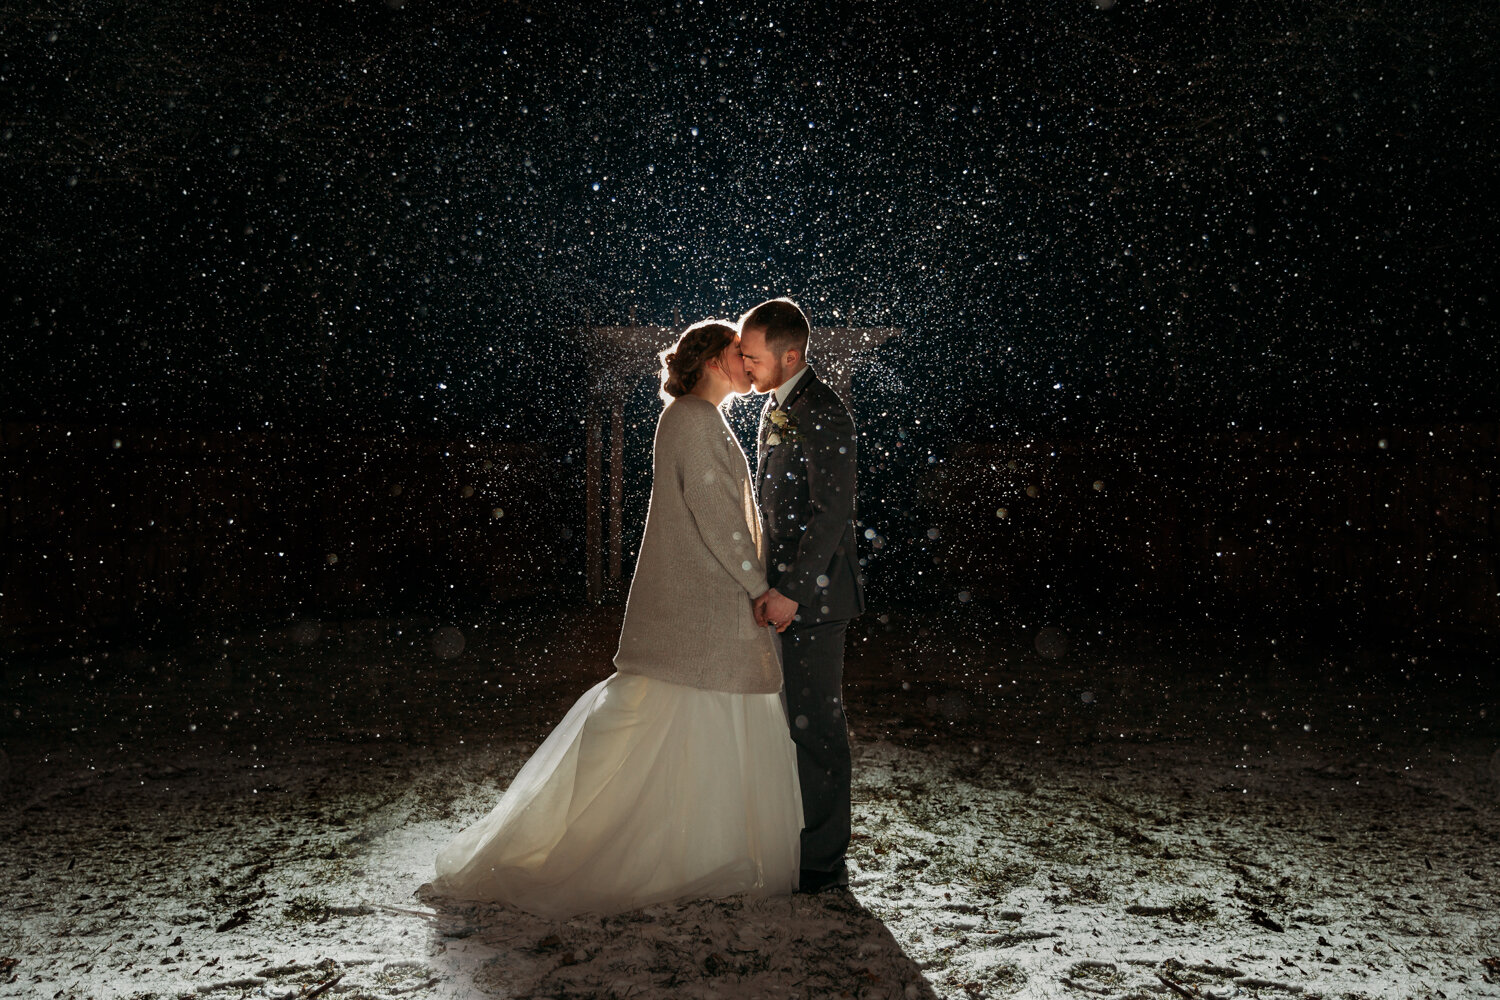 bride-groom-kissing-snow-falling-night-1.jpg